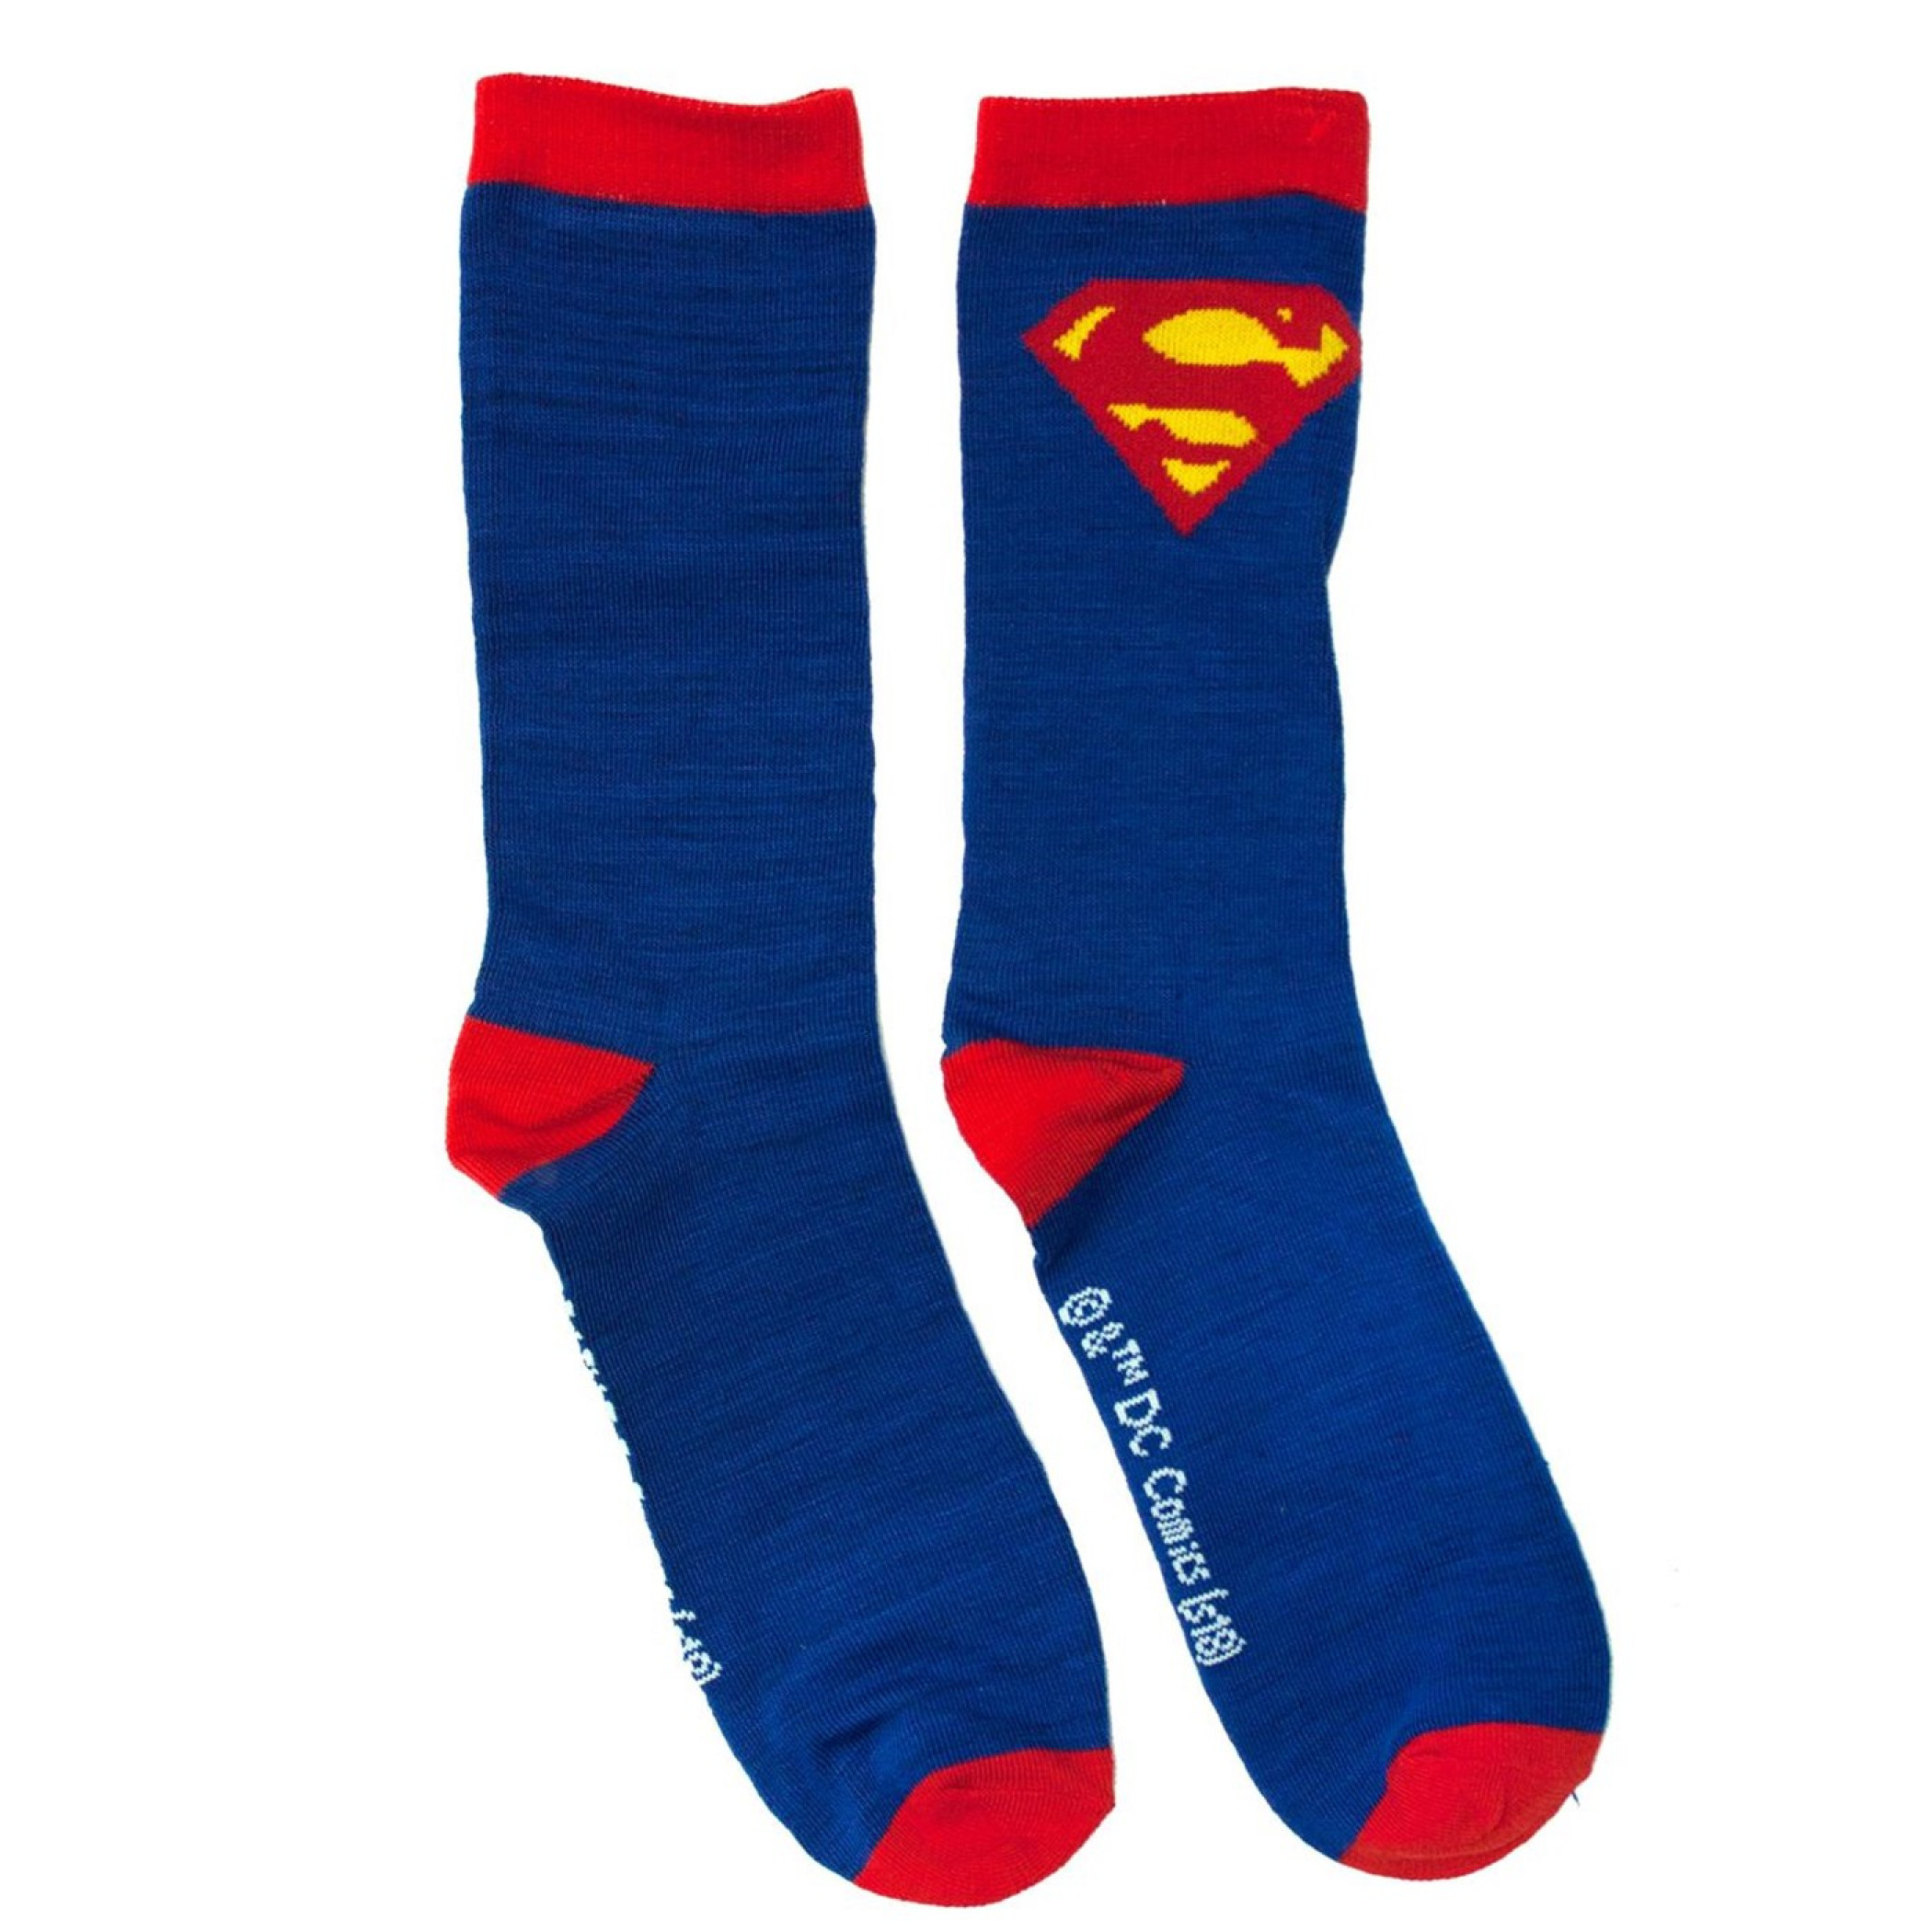 Official DC Comics Retro Wonder Woman Assorted Character Logo Socks Set x2 Pairs 